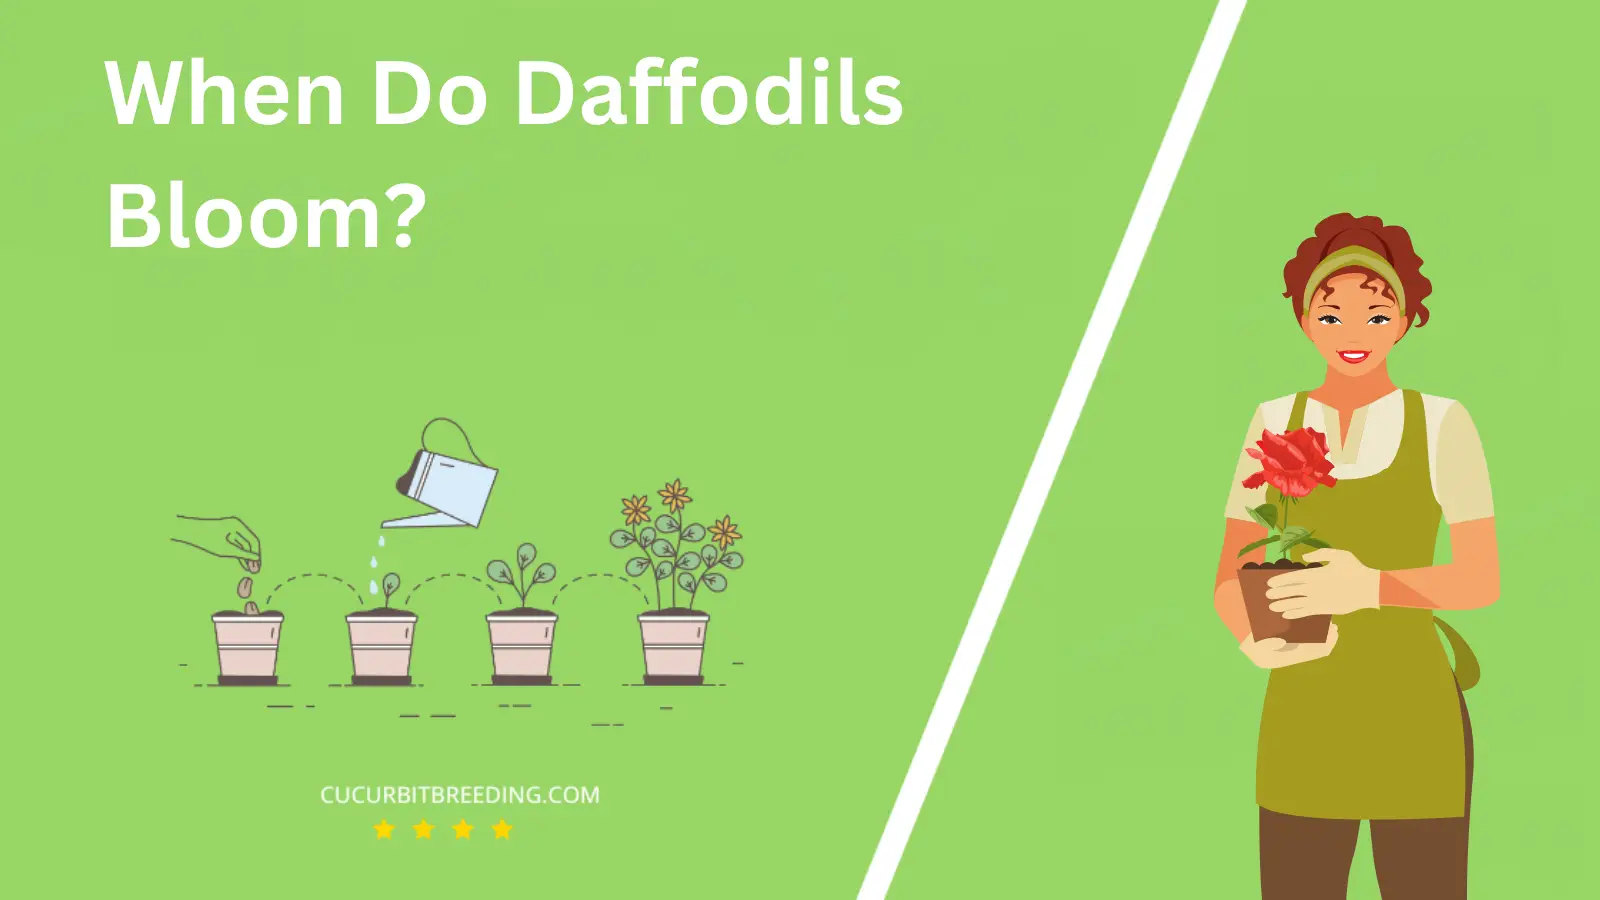 When Do Daffodils Bloom?